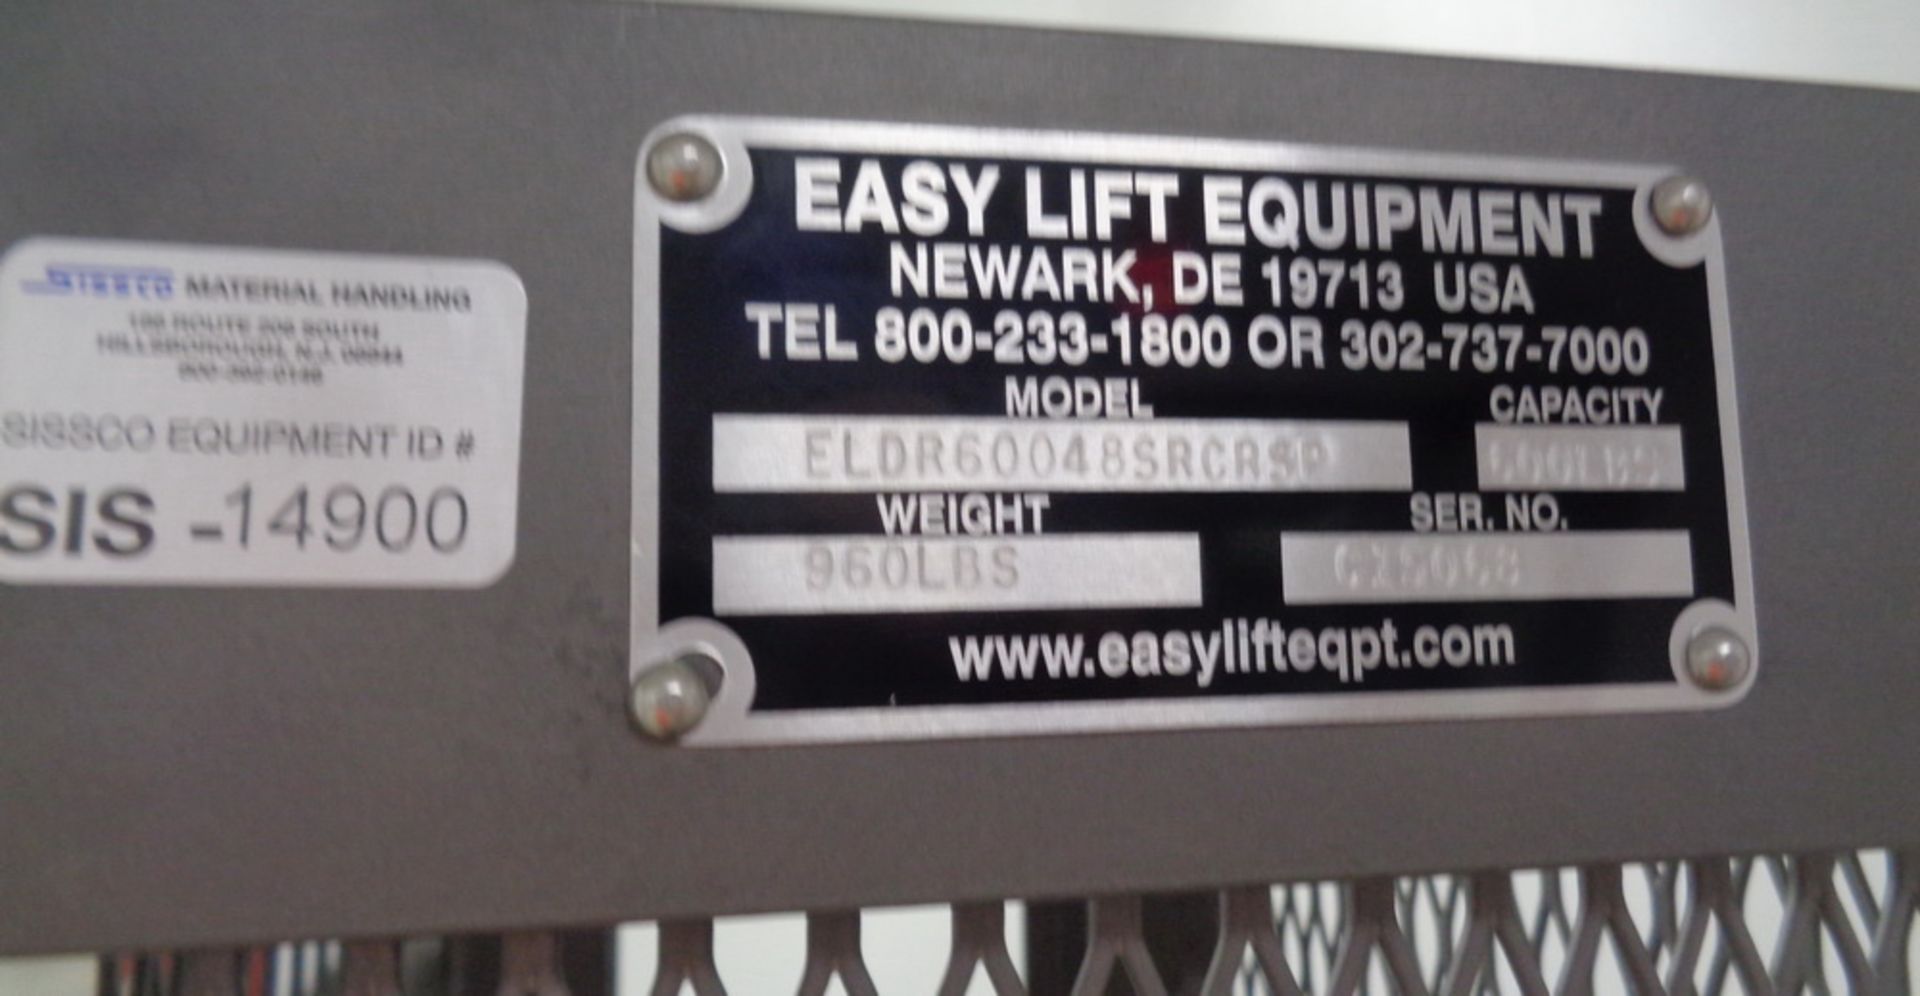 Easy Lift 600lb Portable Drum Lifter, Model ELDR60048SRCRSP, S/N C15068 - Image 6 of 6